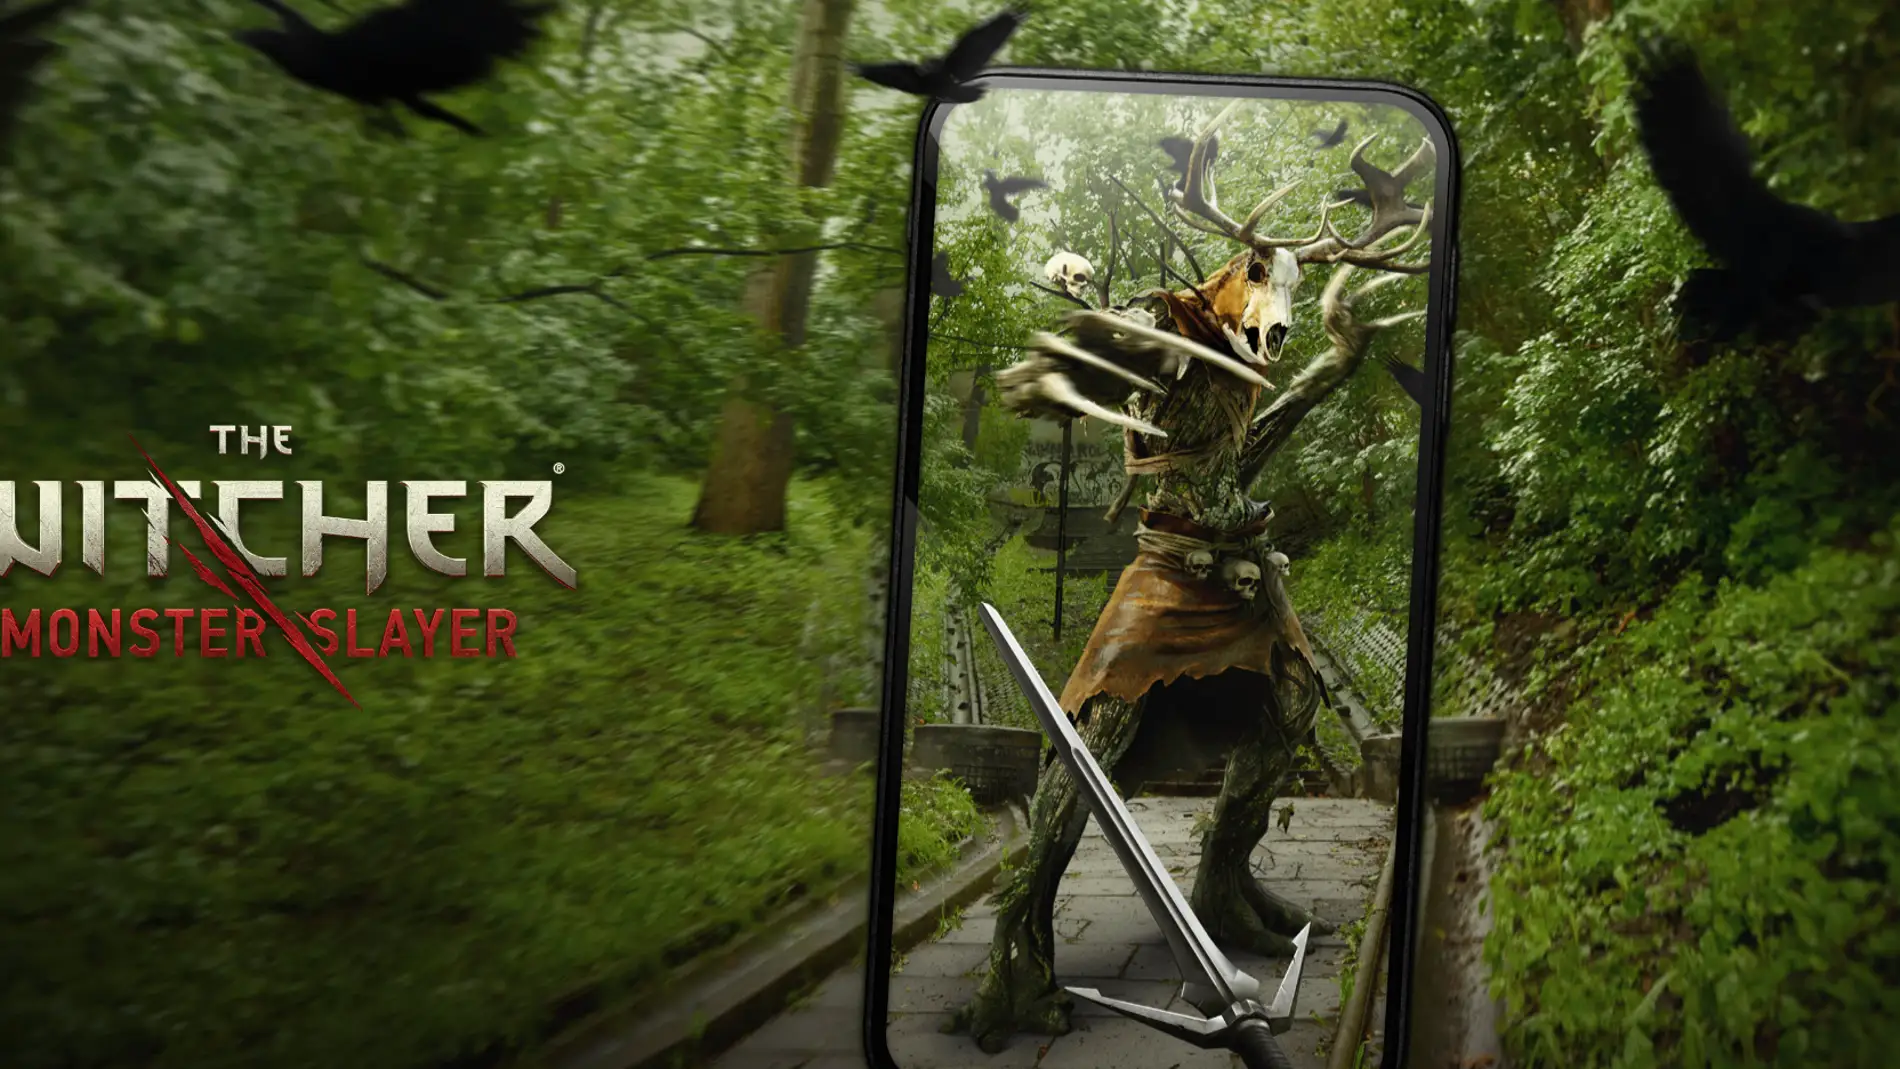 The Witcher Monster Slayer: Consejos para empezar a jugar - VÍDEO